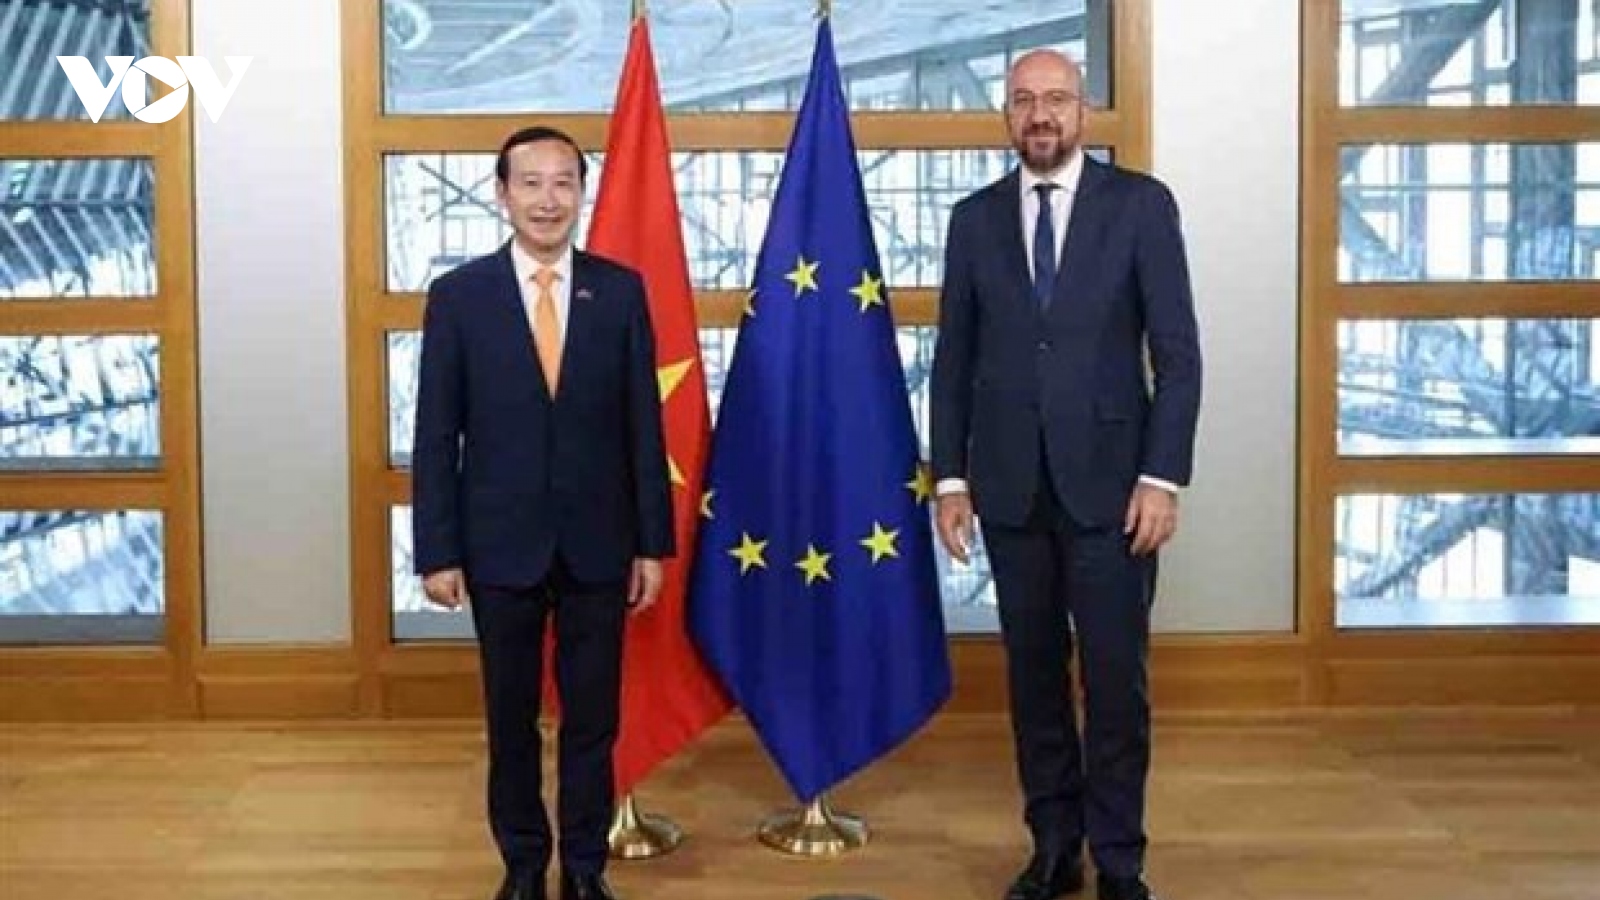 Vietnam keen to step up cooperation with EU, Belgium